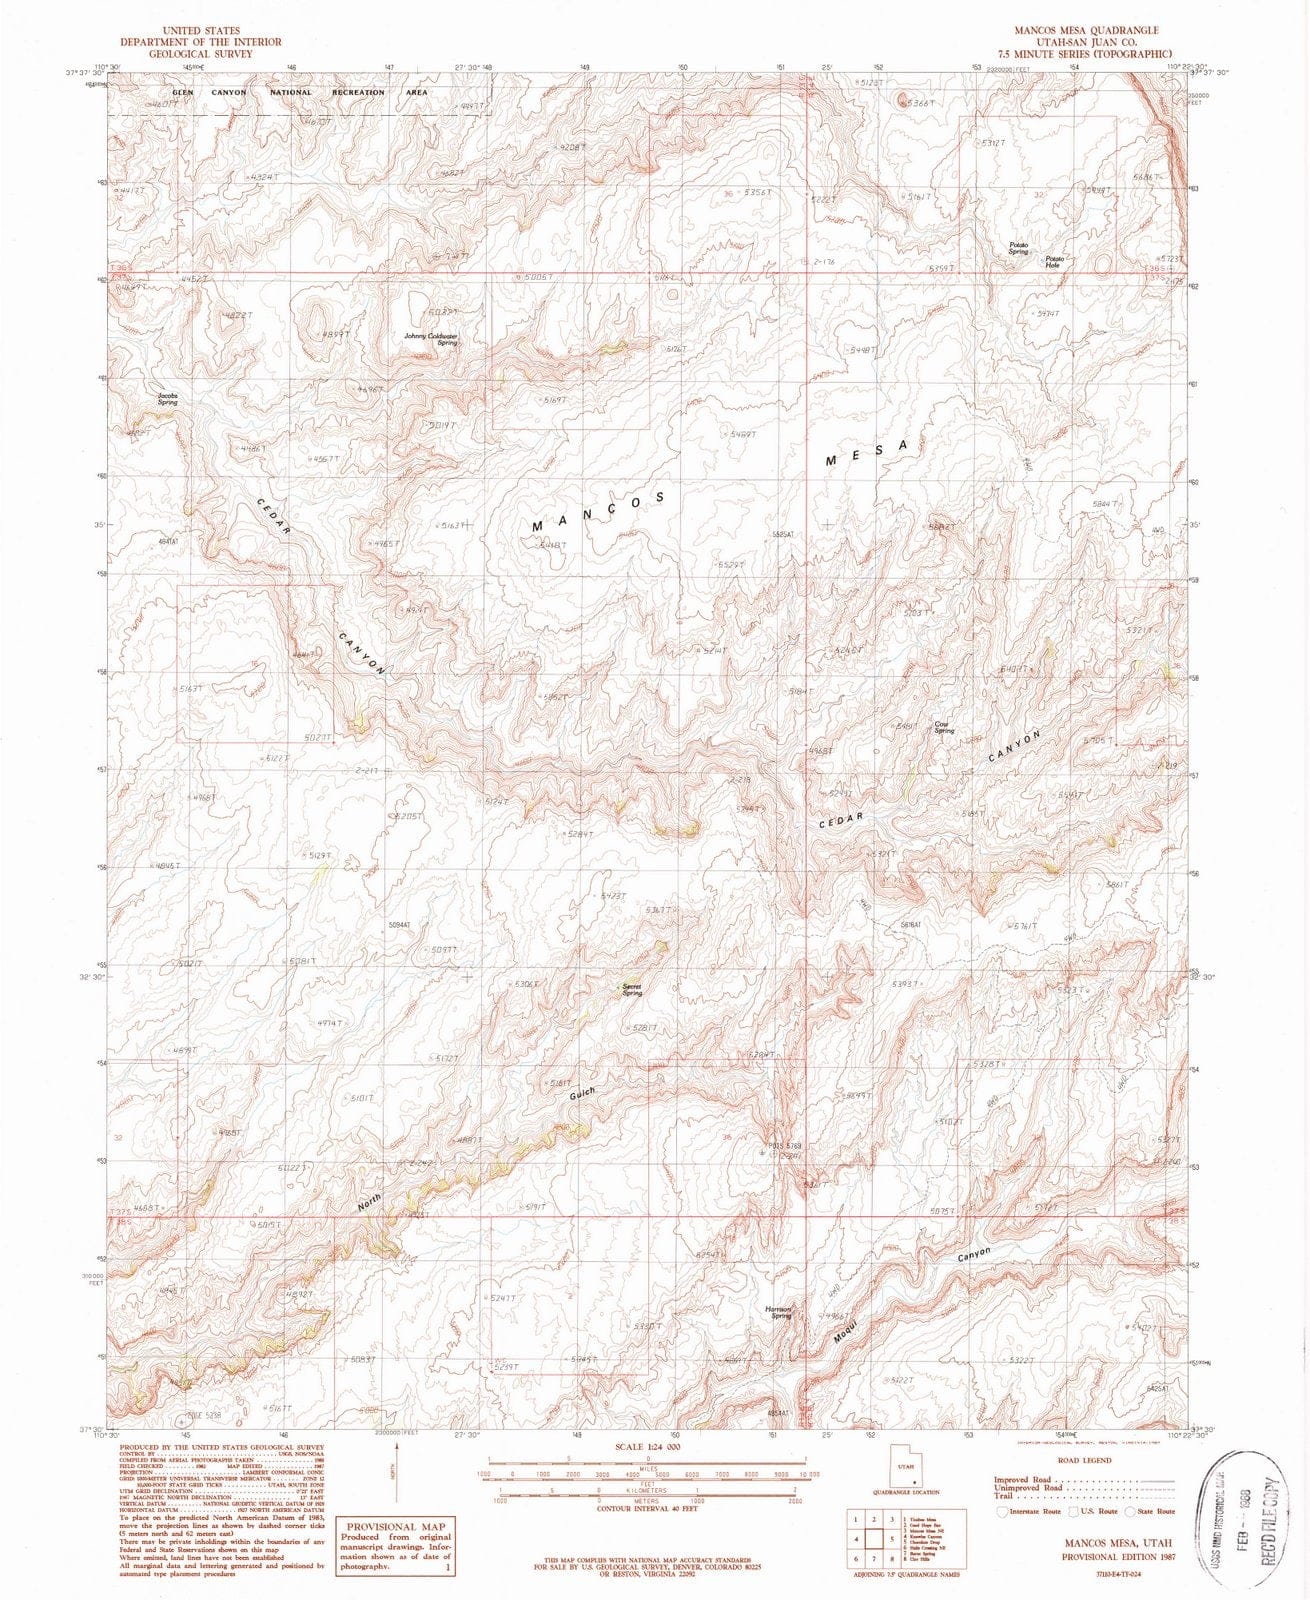 1987 Mancos Mesa, UT - Utah - USGS Topographic Map v2